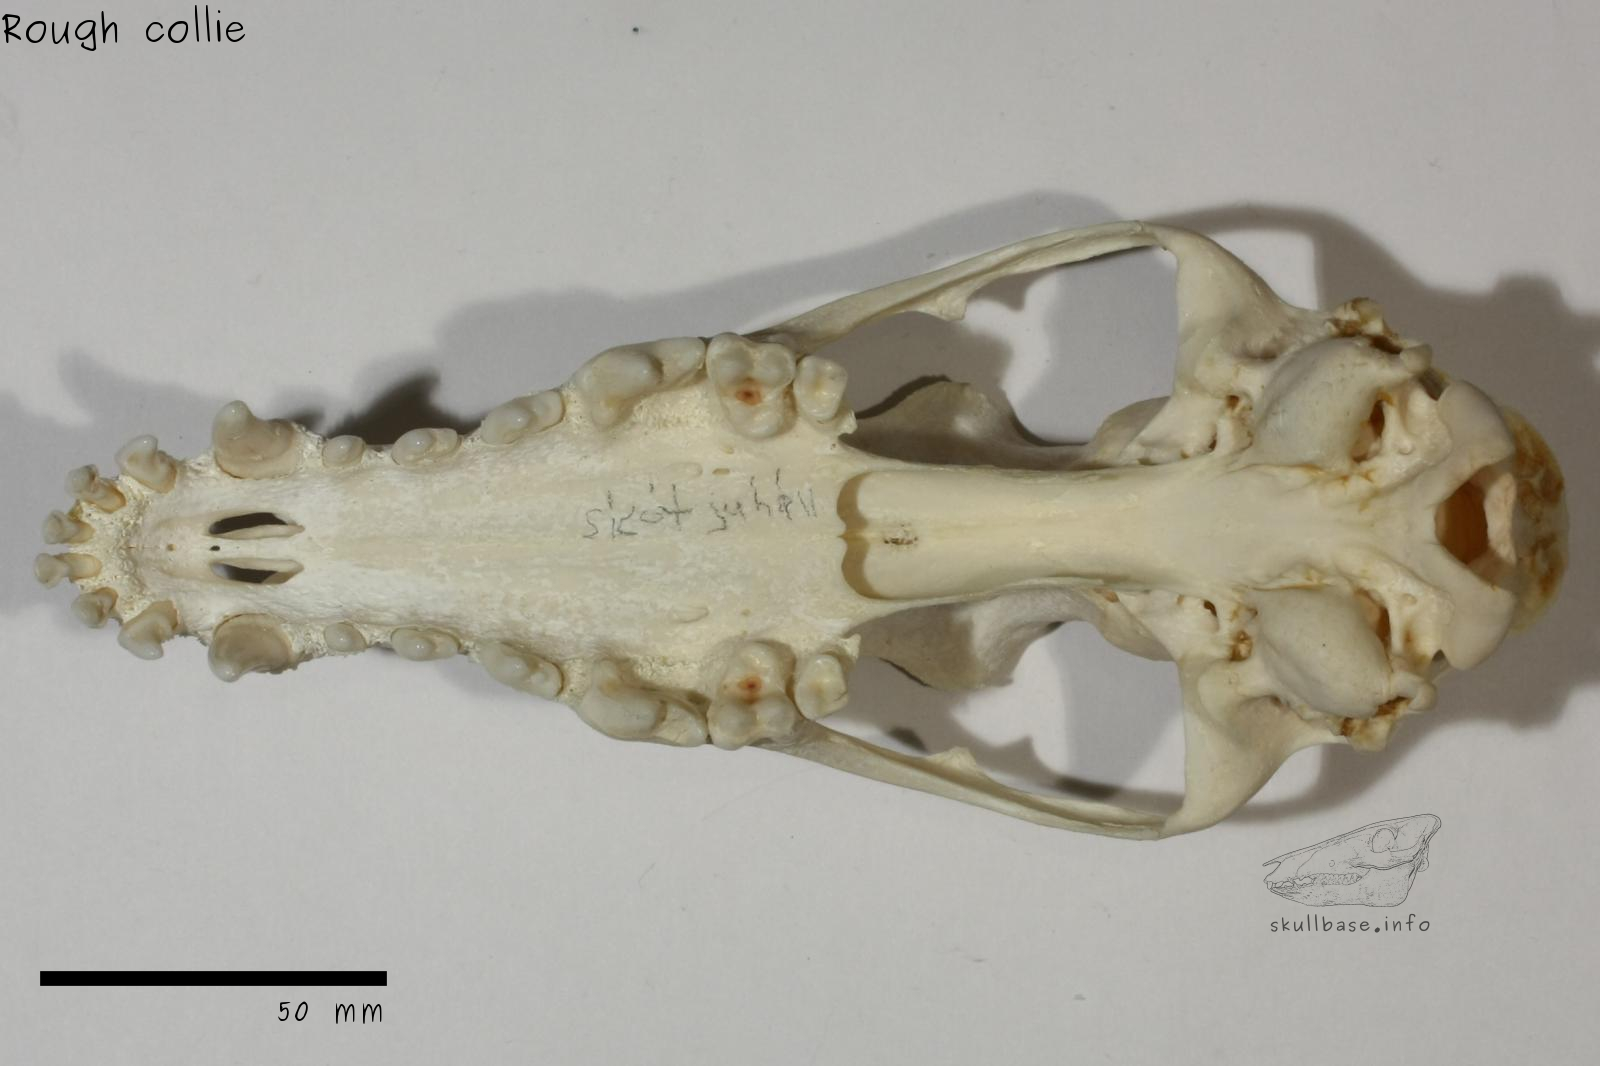 Rough collie (Canis lupus familiaris) skull ventral view